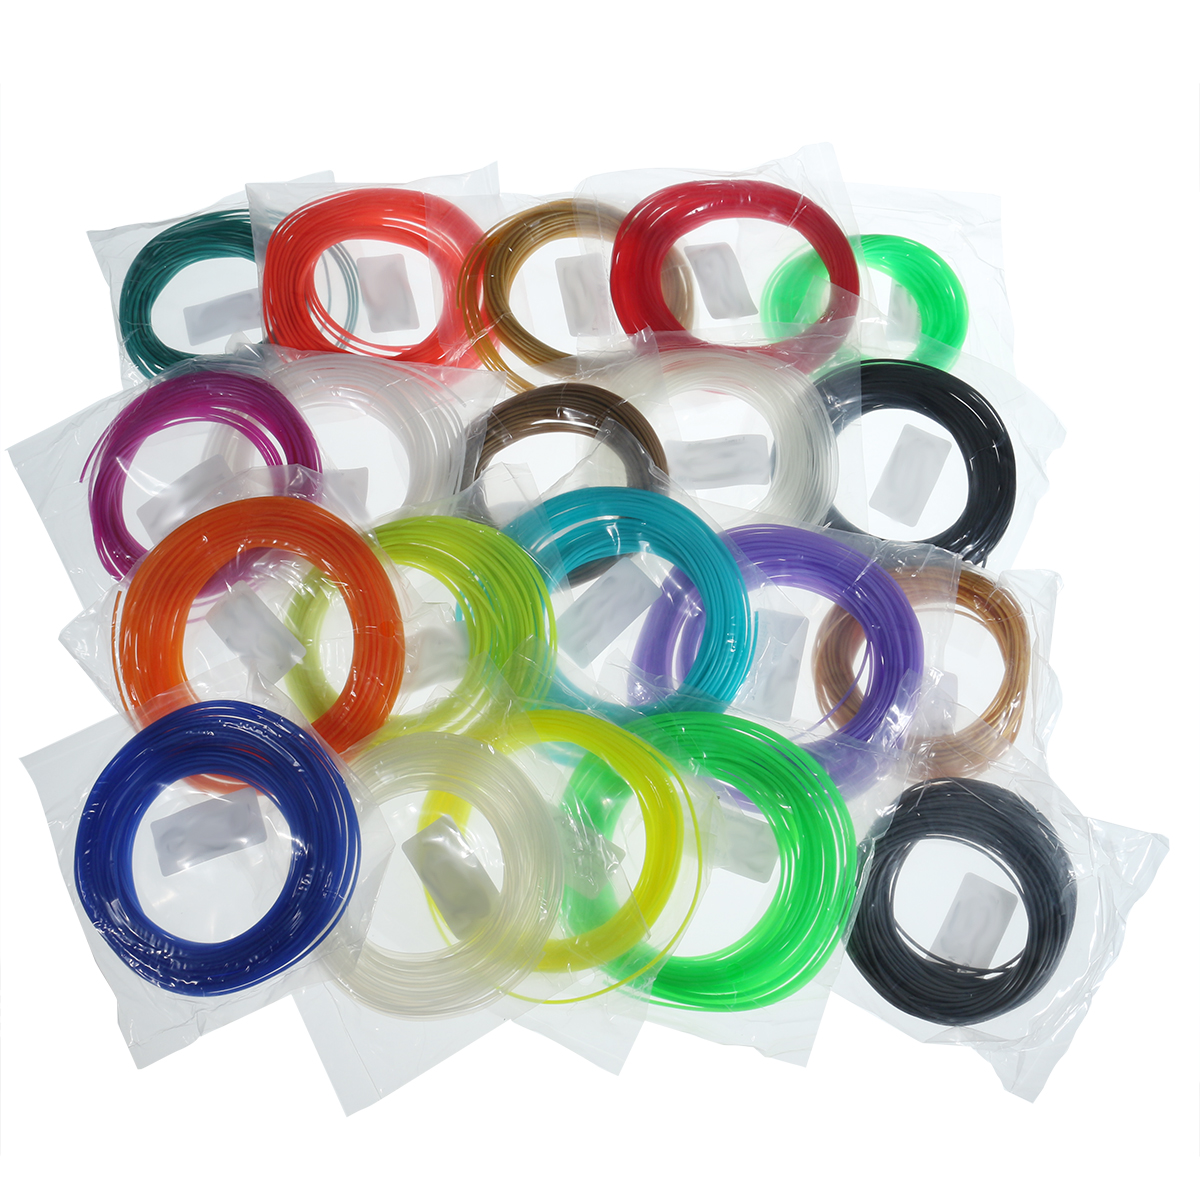 20 Colors/Pack 5/10m Length Per Color PLA 1.75mm Filament for 3D Printing Pen 0.4mm Nozzle 13